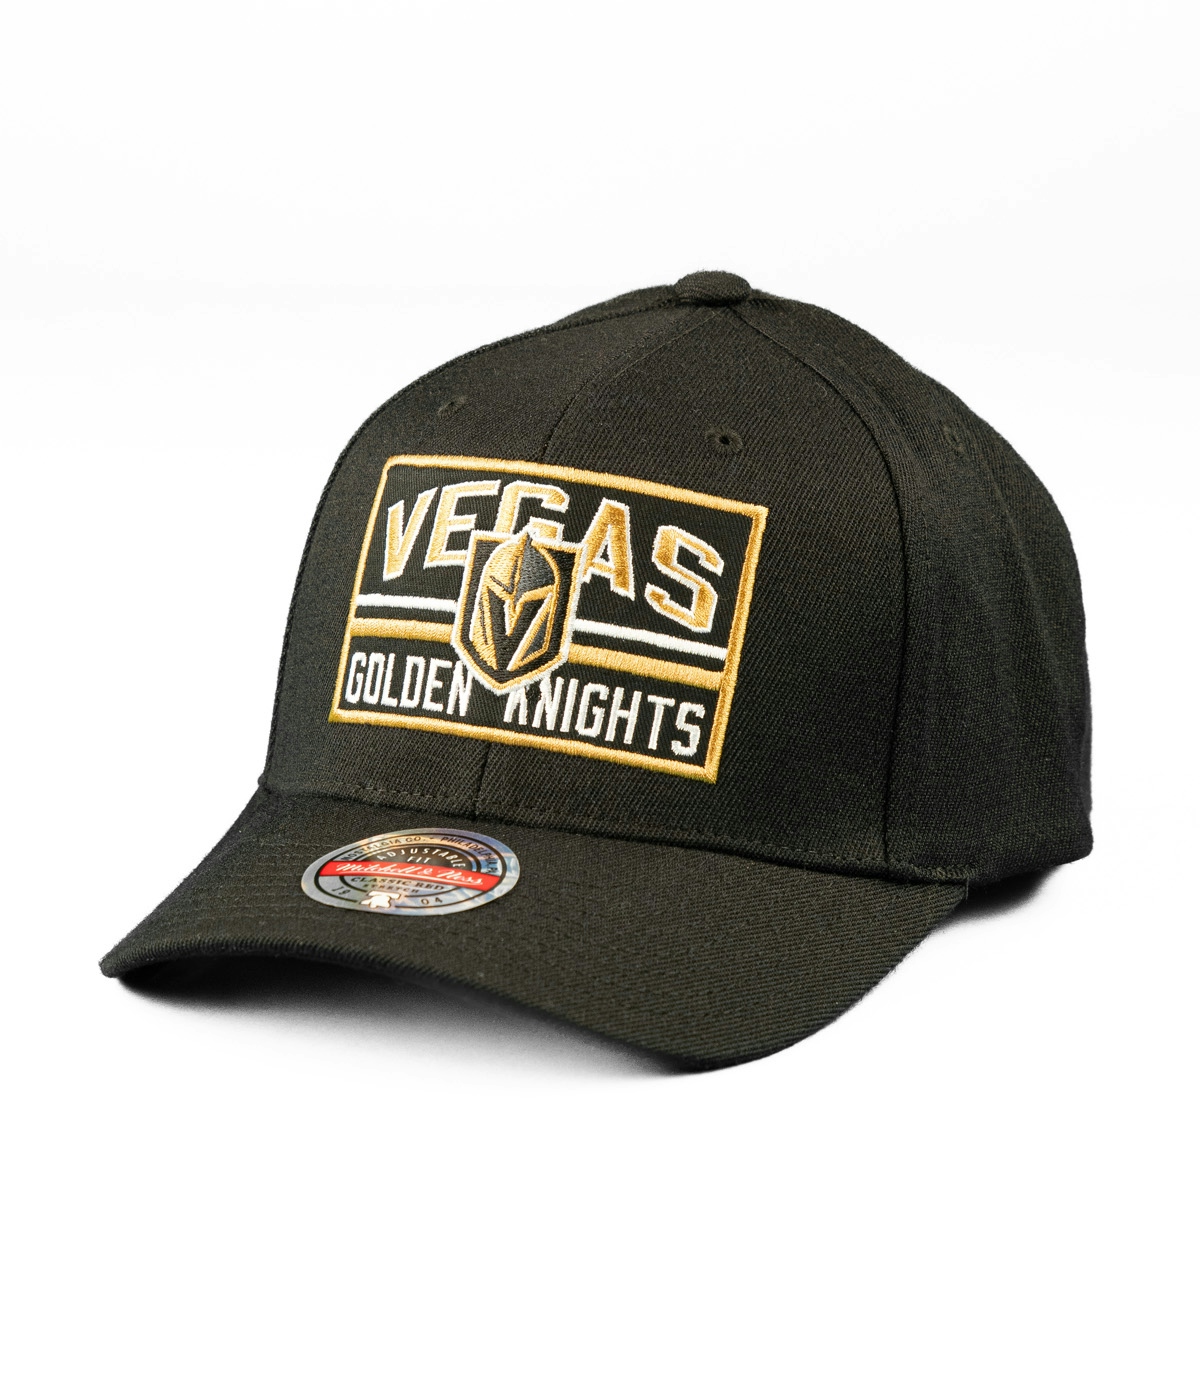 Mitchell & Ness Horizon Patch - Vegas Golden Knights Cap Black 1